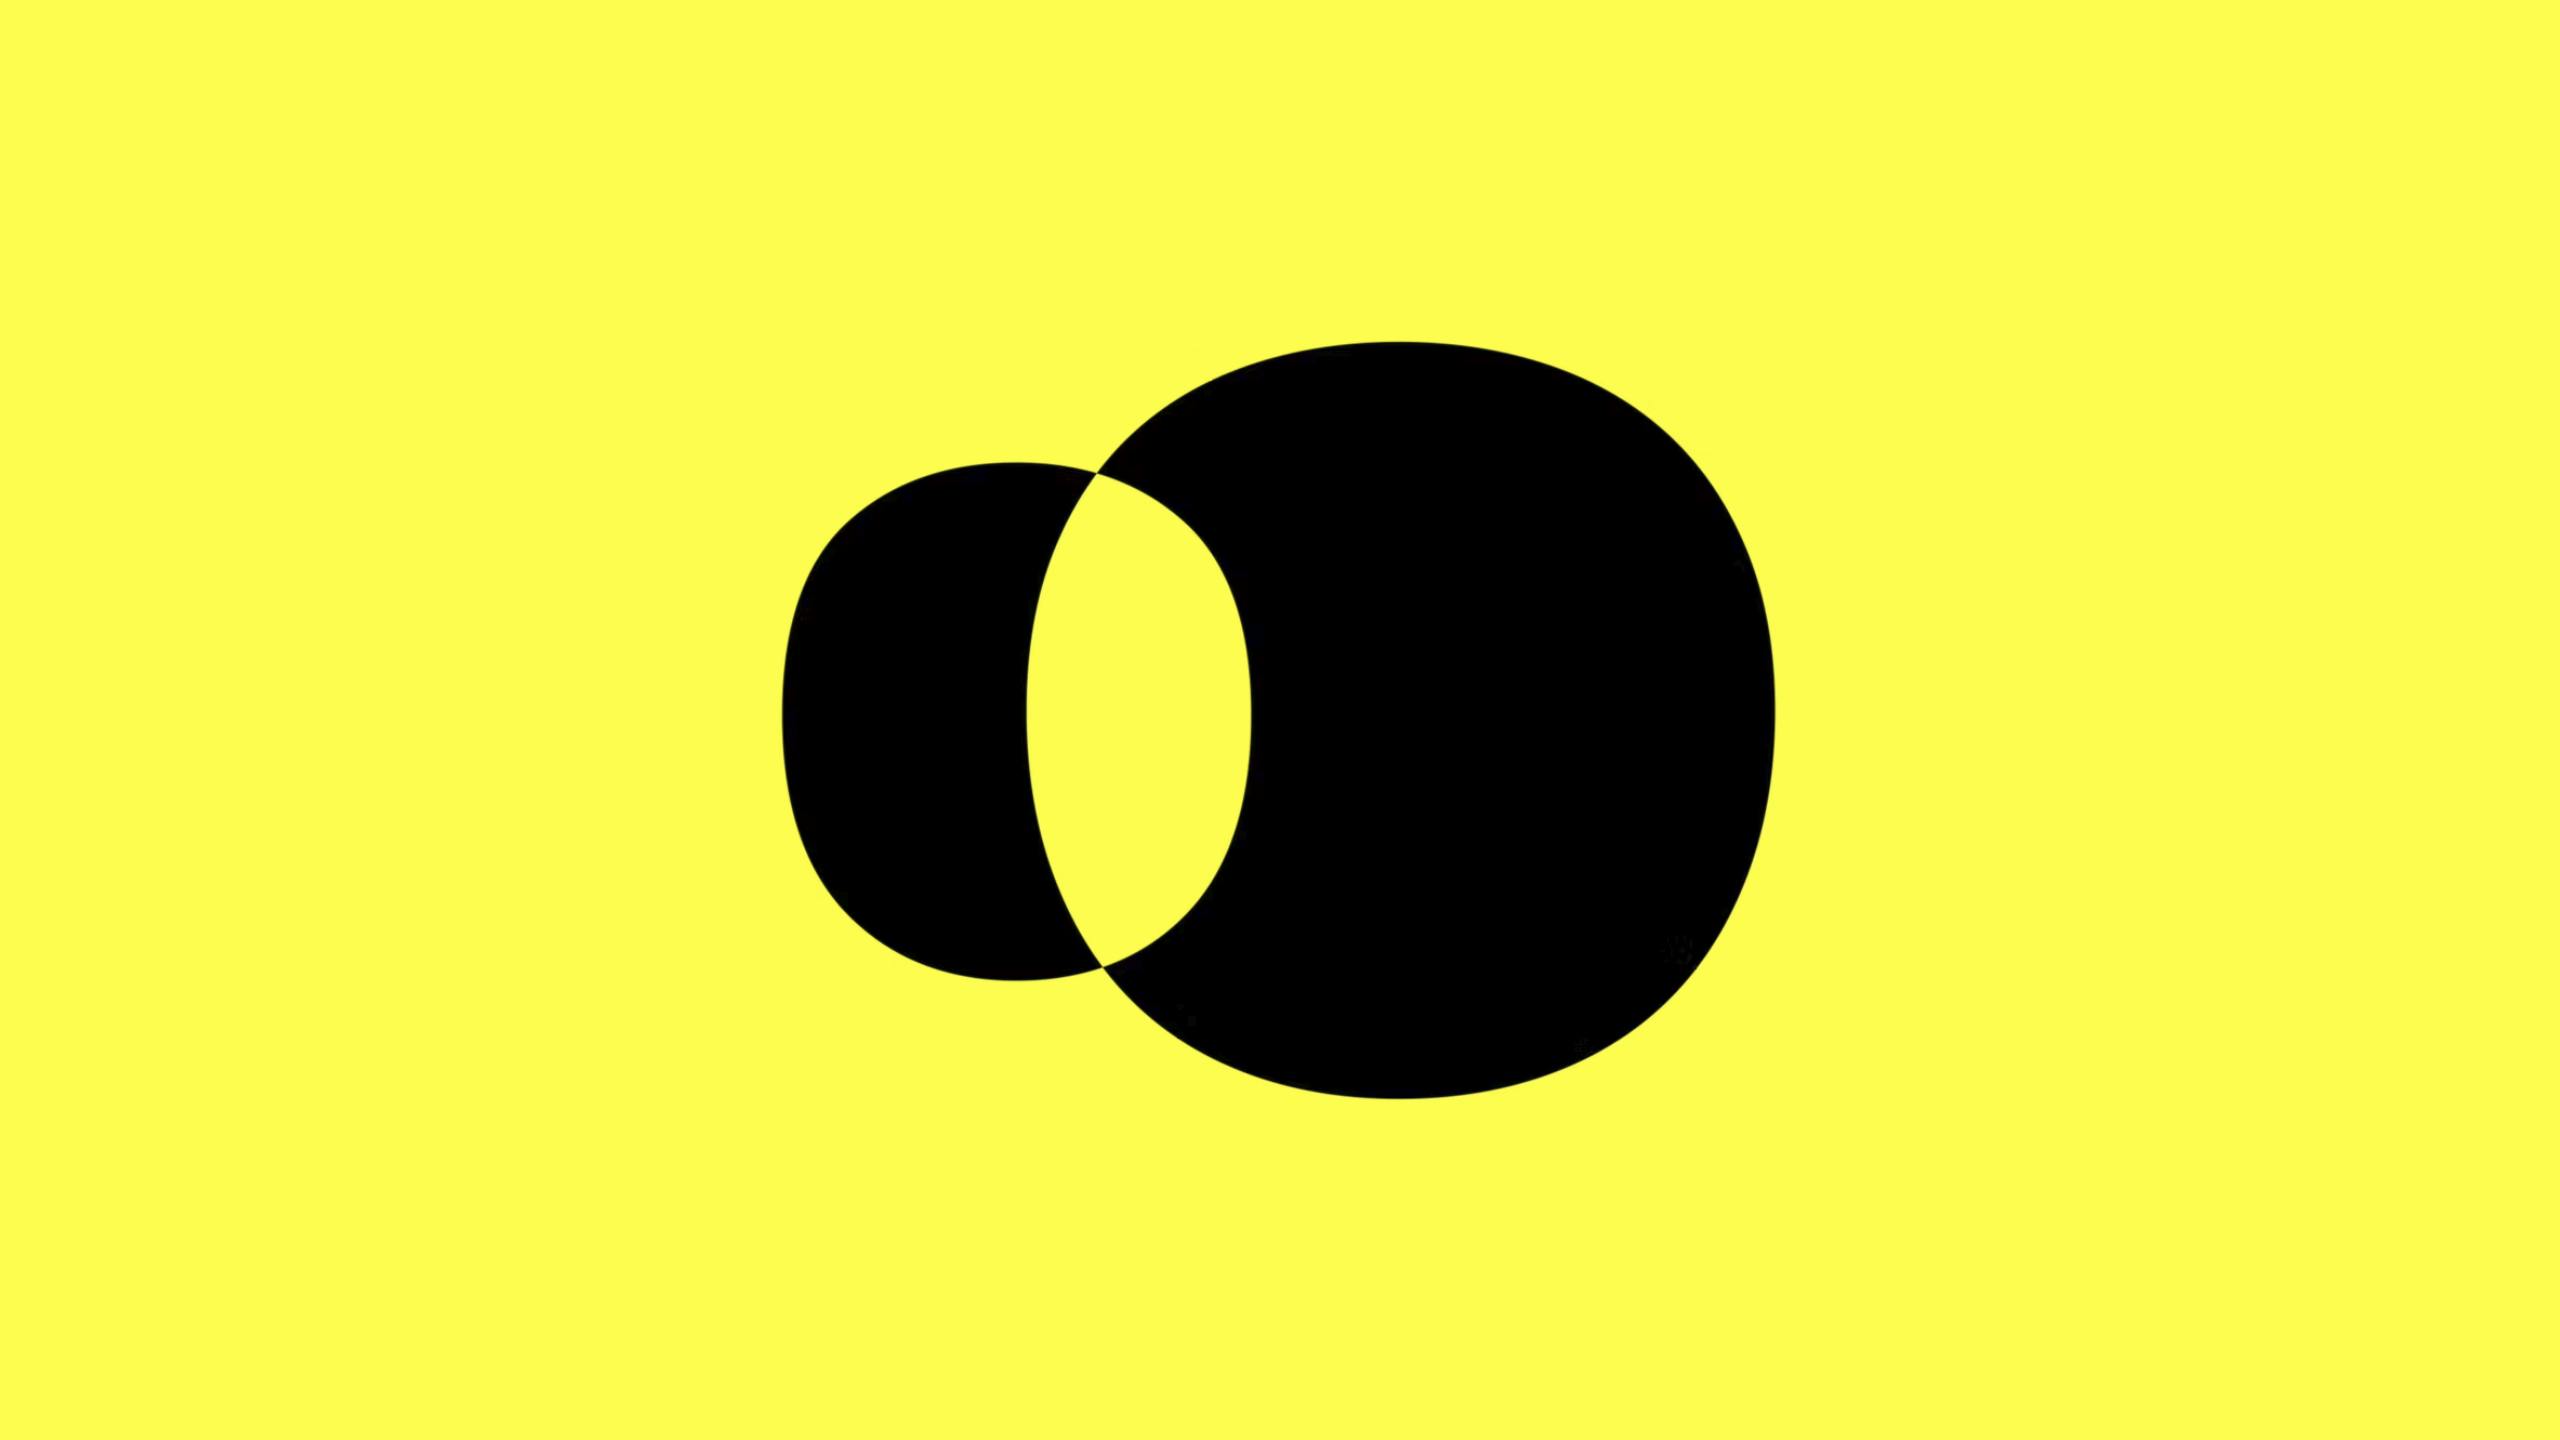 Motion design of the Echio logo.